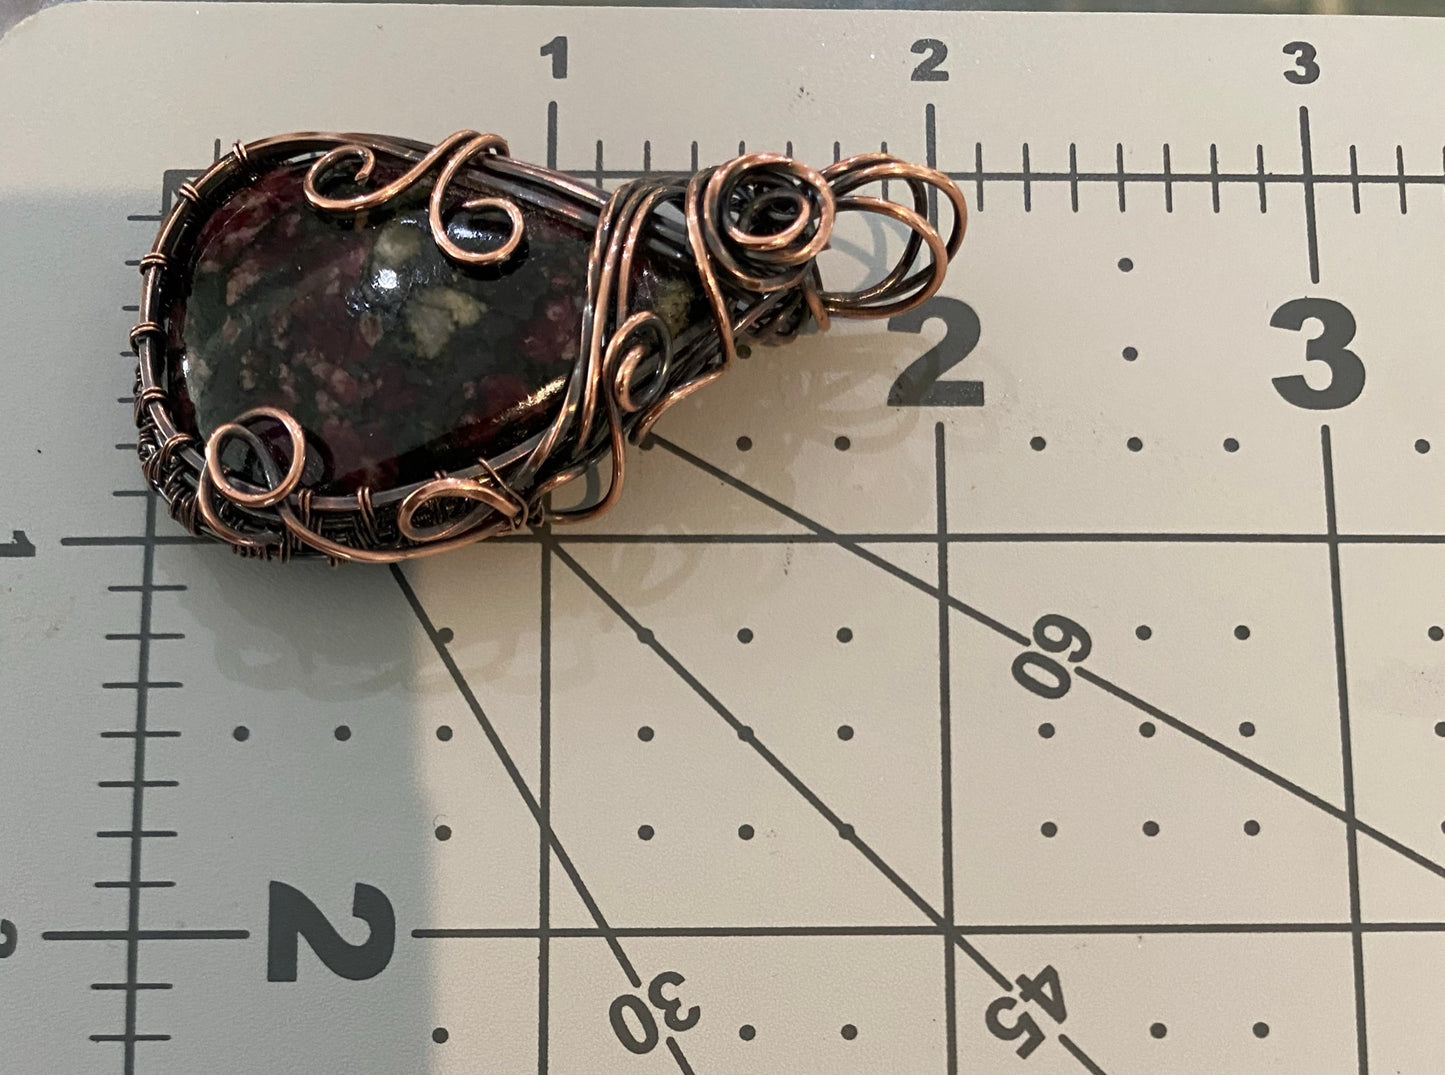 Eudialyte Teardrop Pendant Wrapped in Oxidized Copper Wire